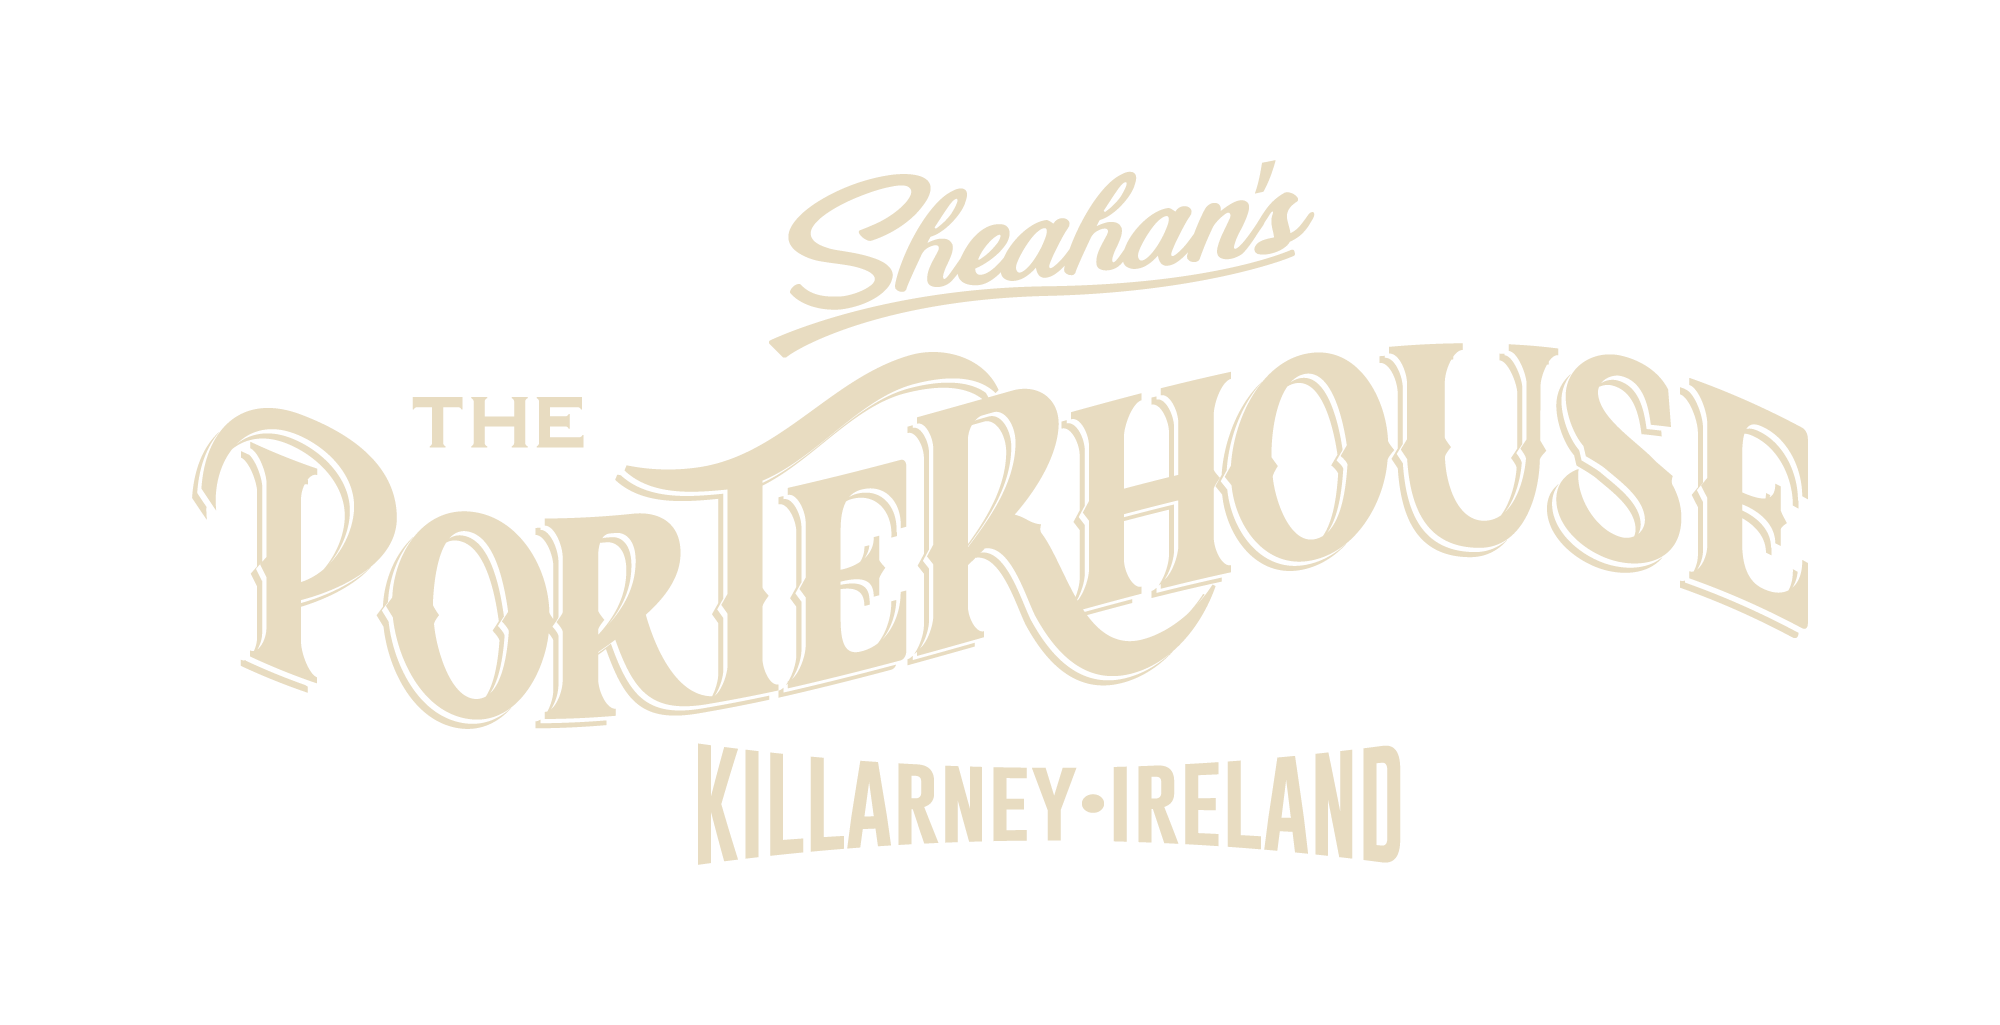 The Porterhouse Killarney